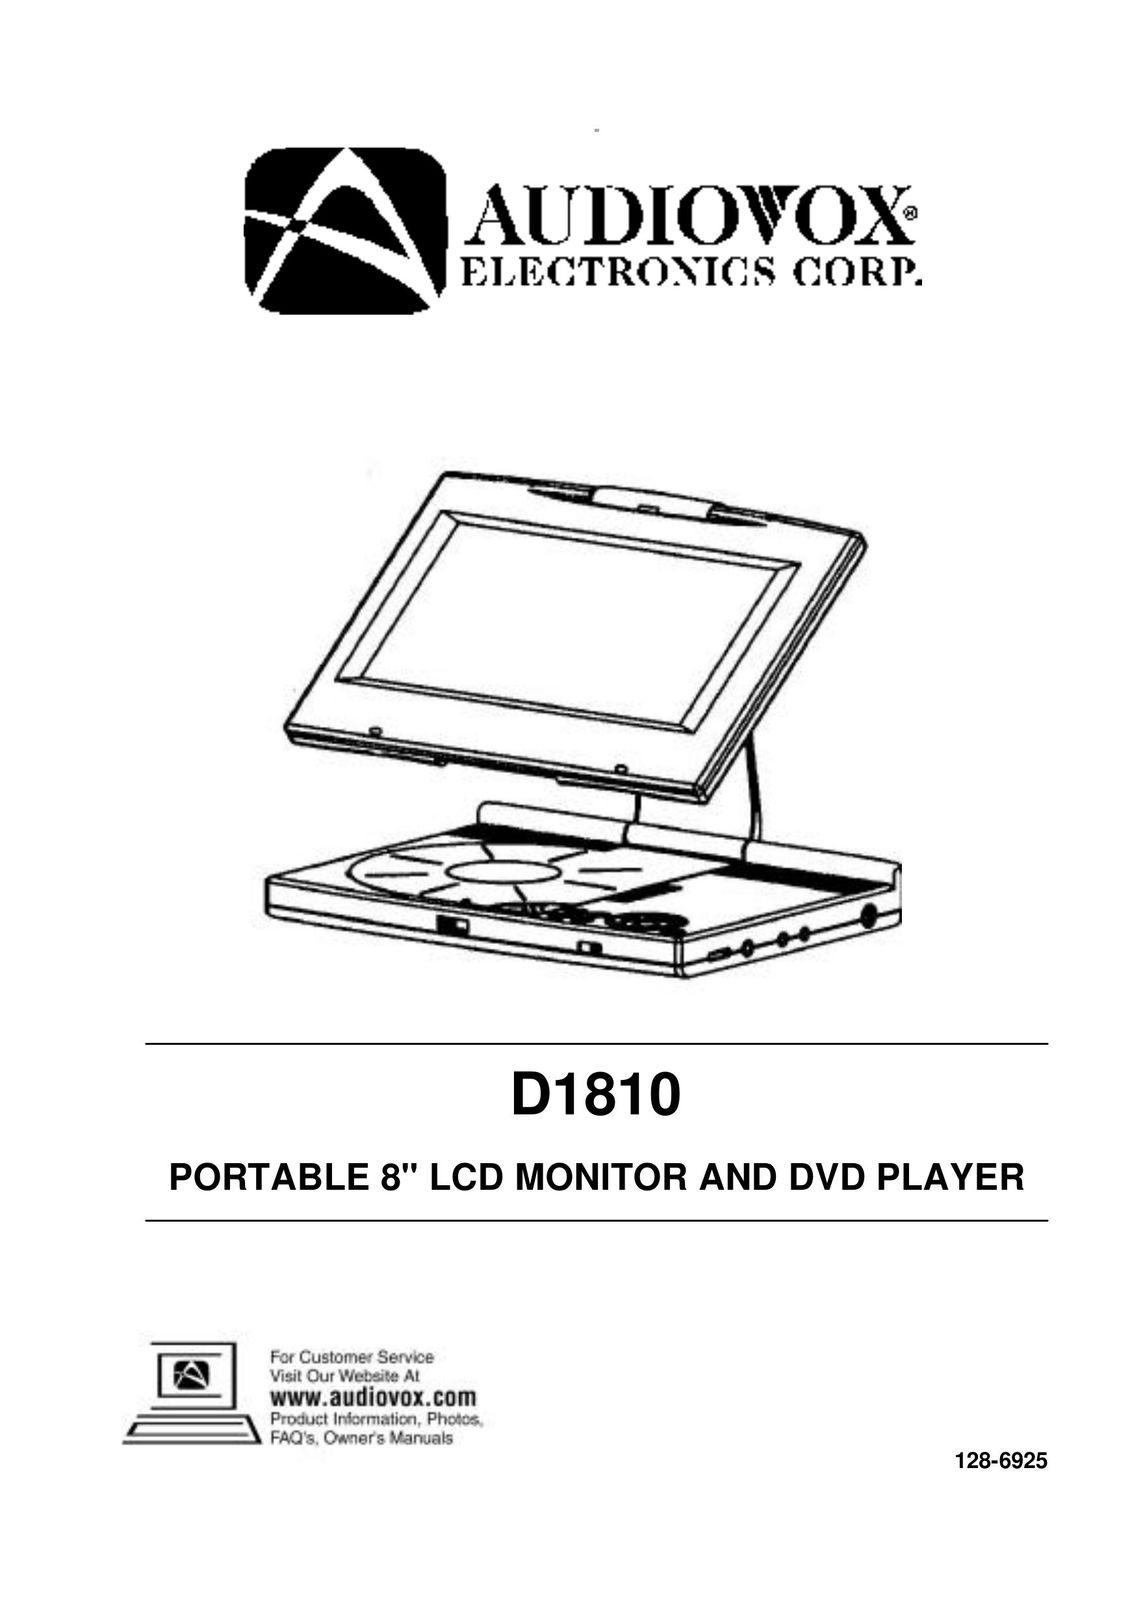 Audiovox D1810 Portable DVD Player User Manual